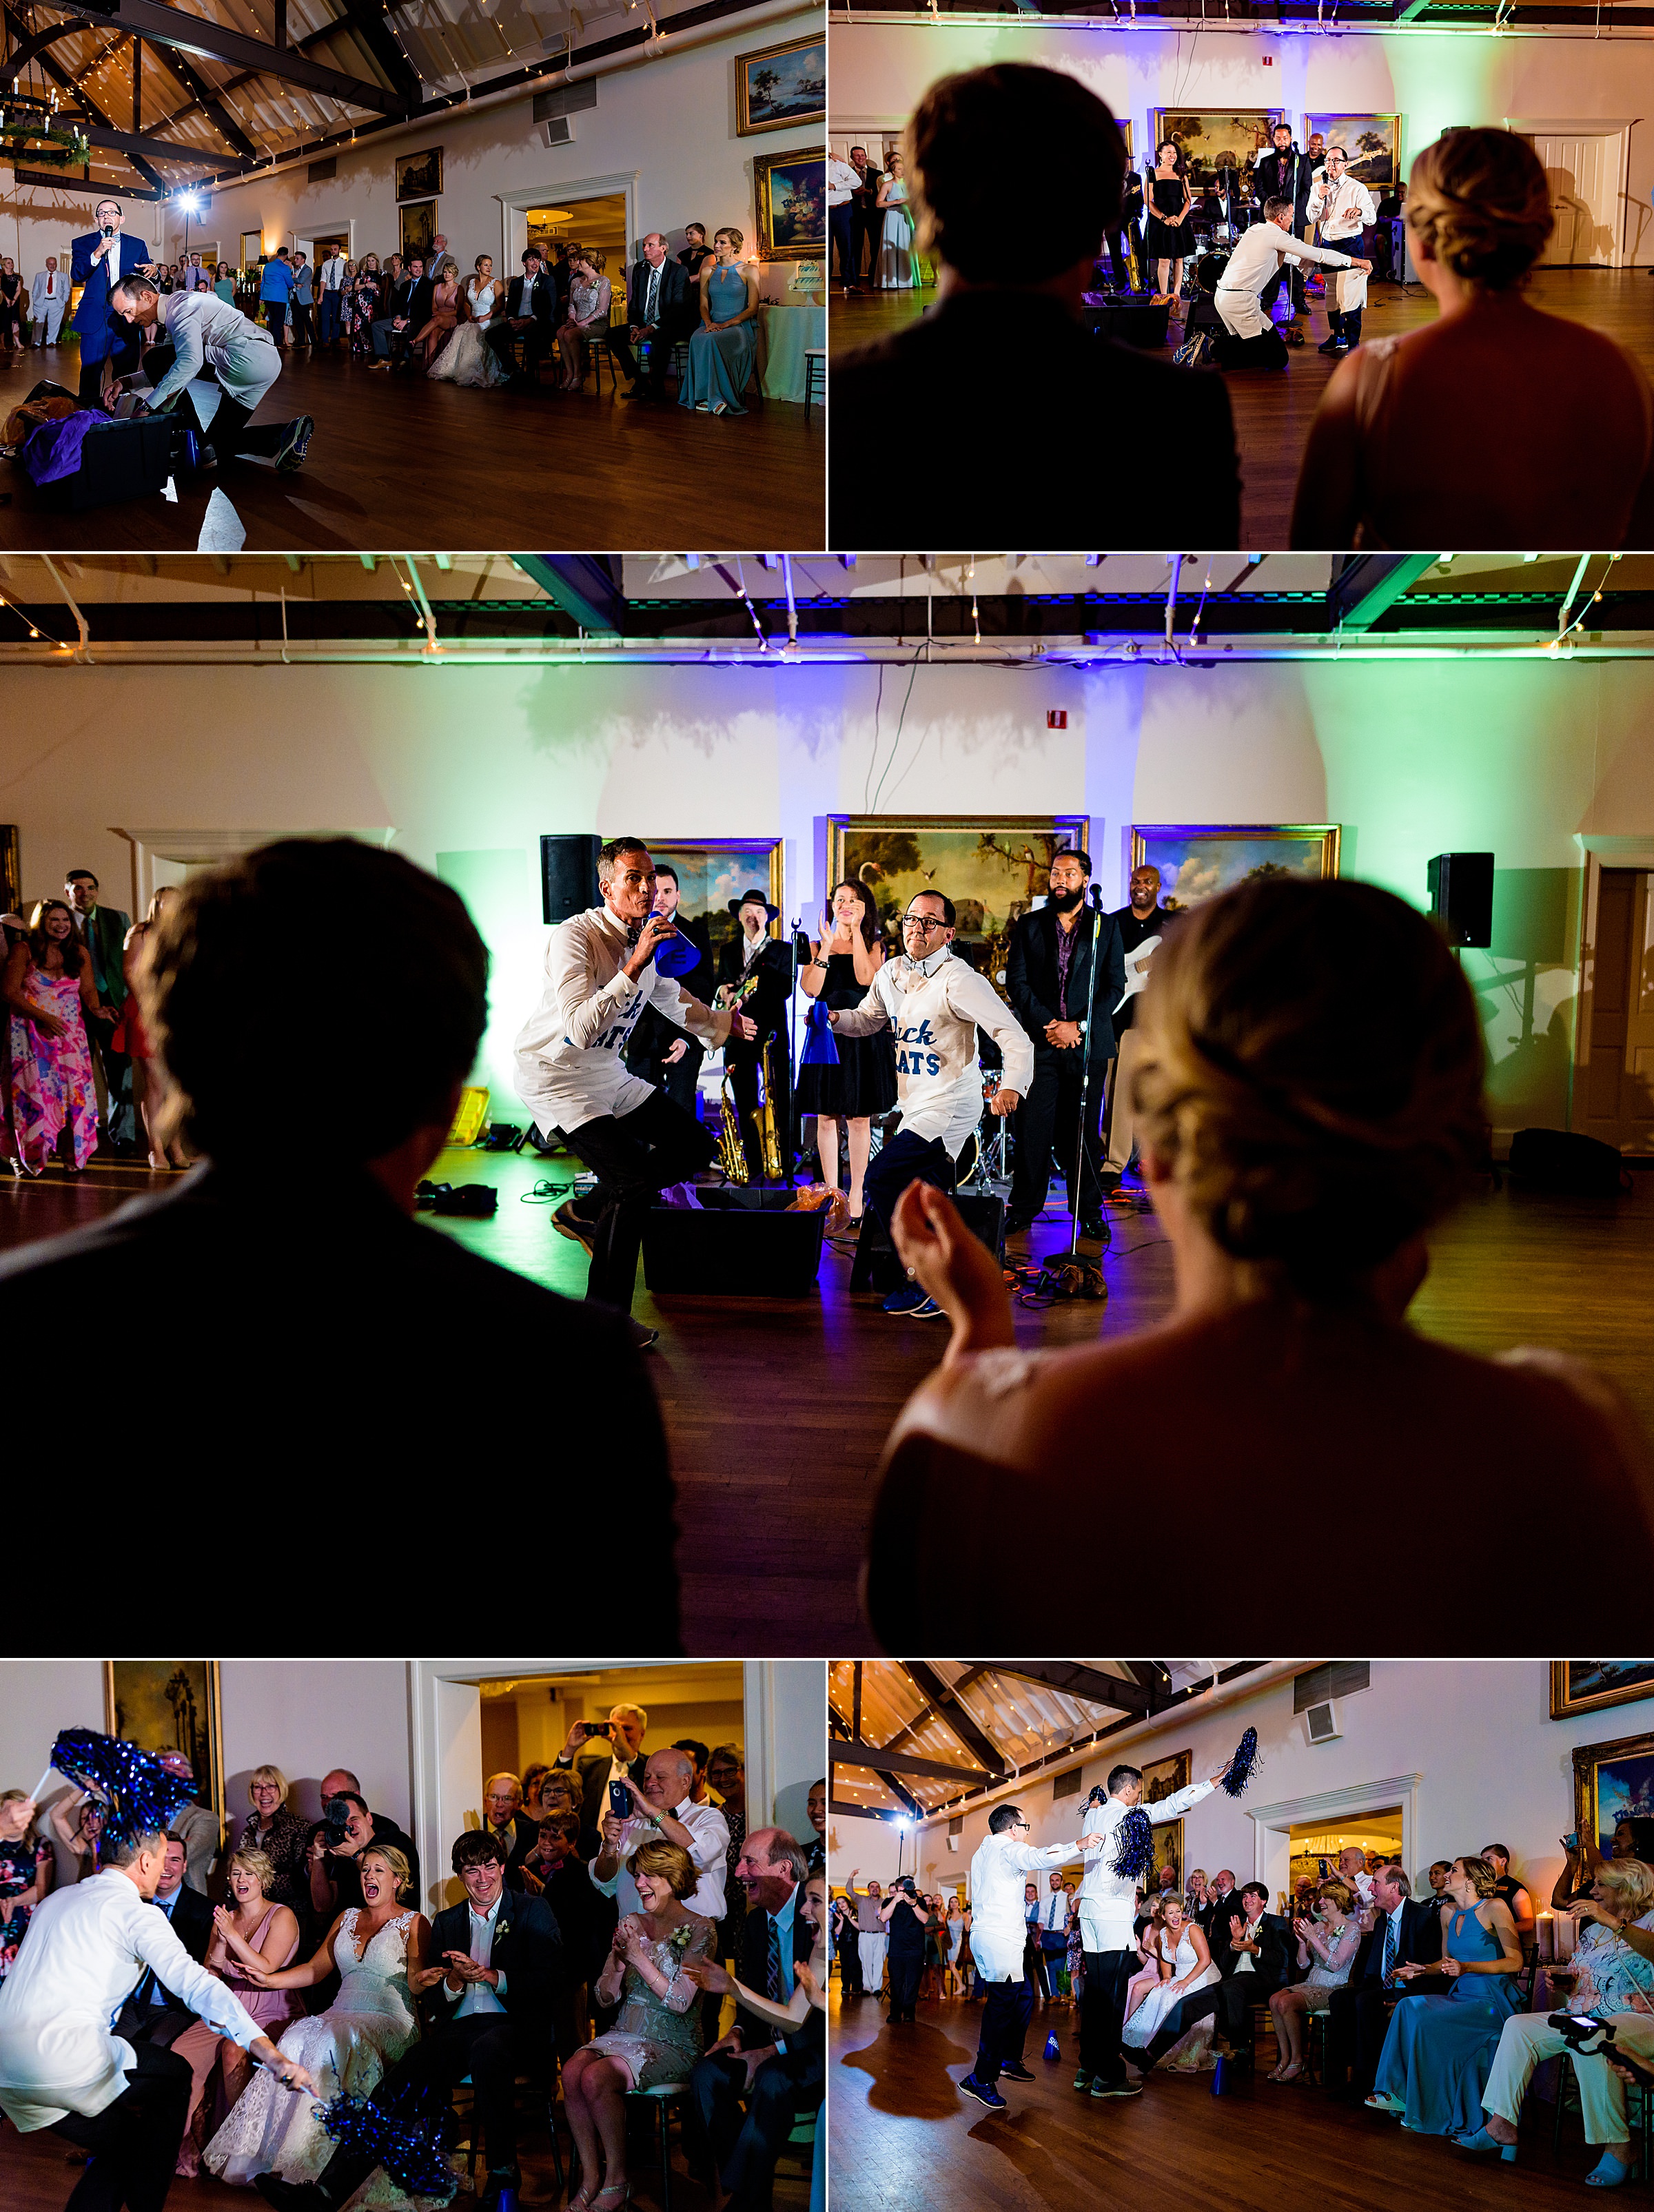 Surprise Wedding Performance | Hope Valley Country Club Wedding, Wedding, North Carolina Wedding Photographers, Durham Wedding Photographers, Country Club Wedding | kivusandcamera.com